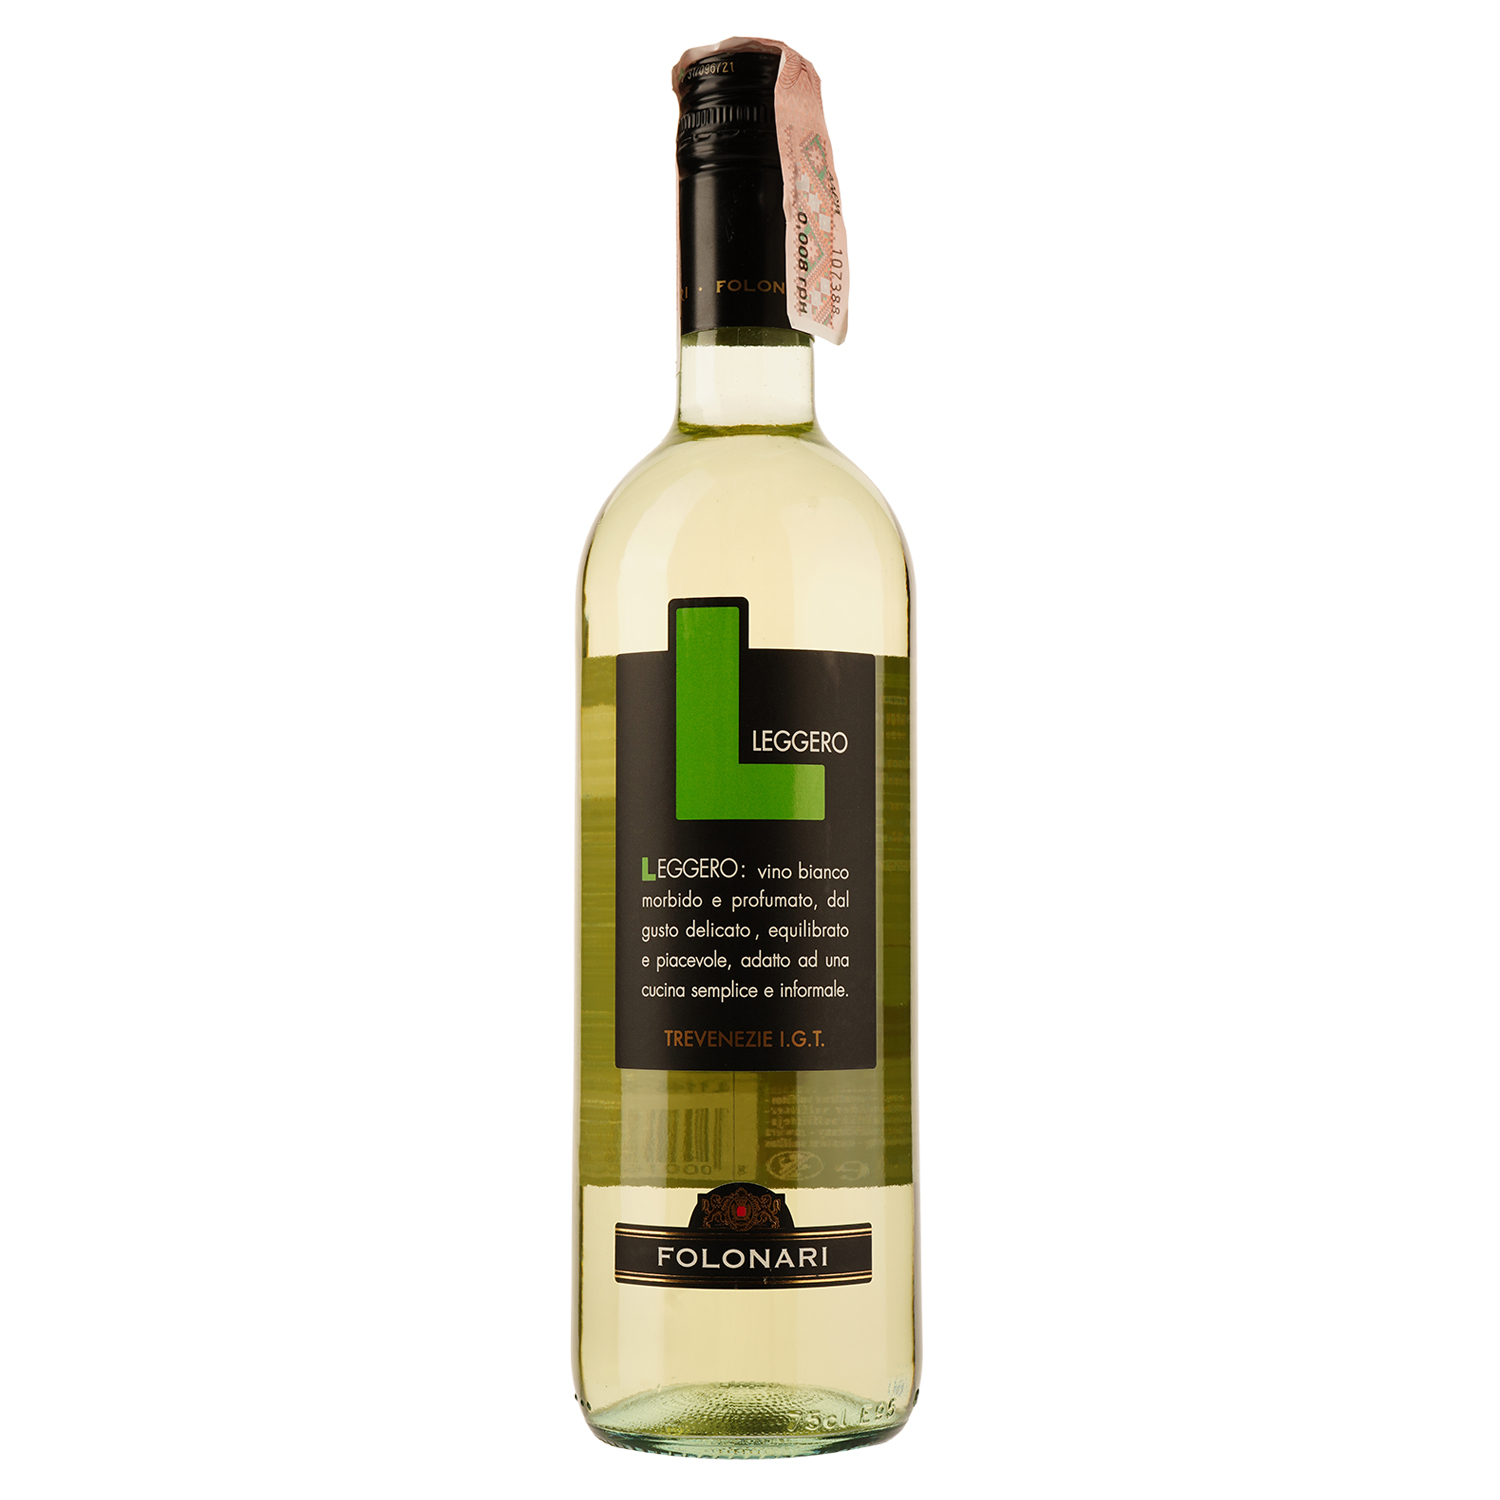 Вино Folonari Leggero L delle Trevenezie IGT, біле, сухе, 0,75 л - фото 1